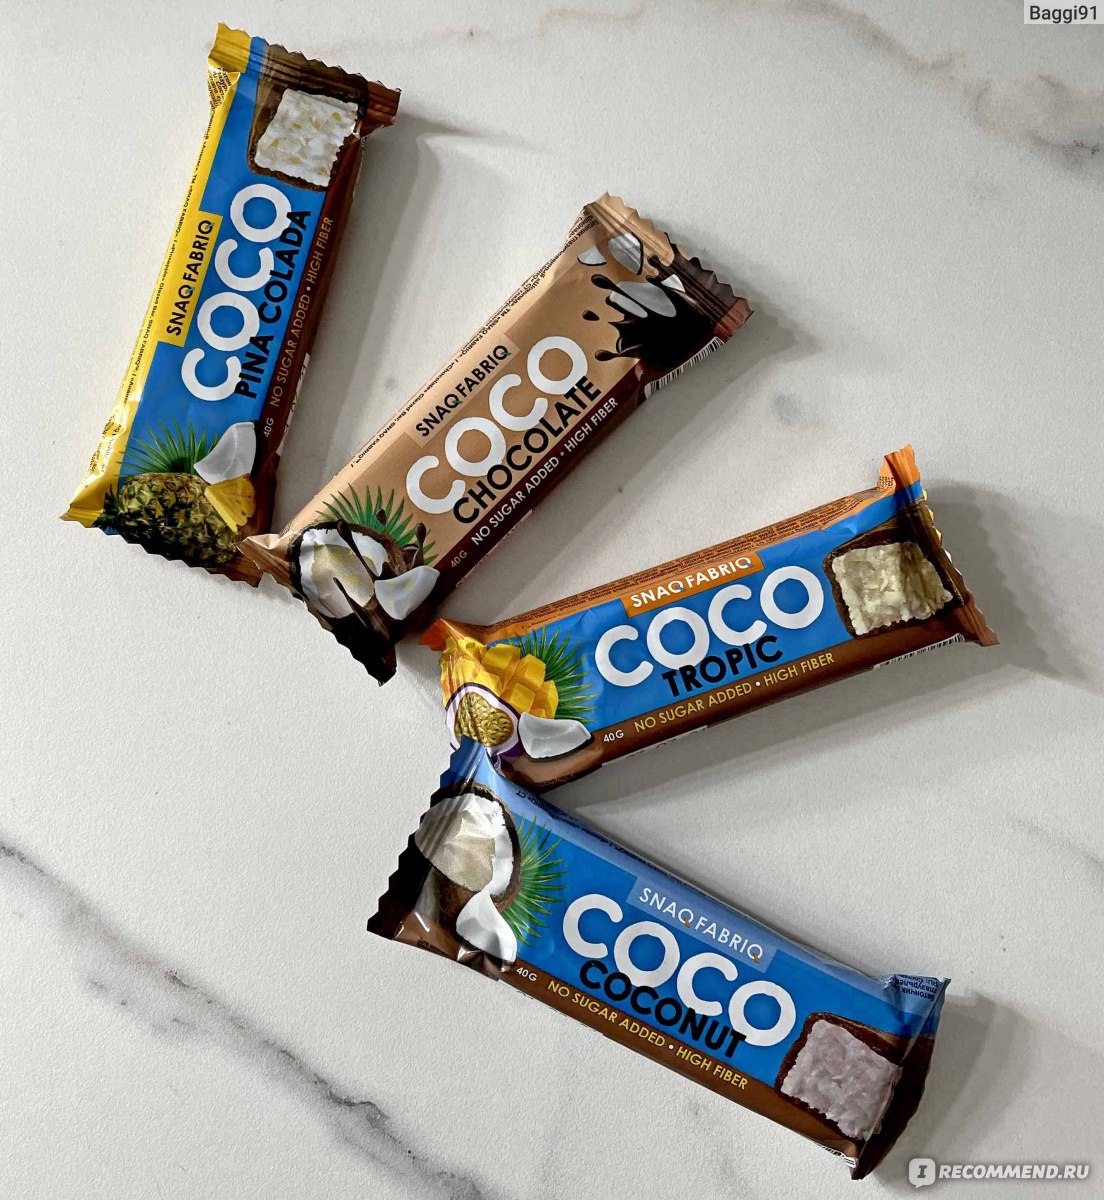 Батончики snaq без сахара. Snaq Fabriq батончик Coco. Батончик Coco White Choco. Coco Coconut батончик шоколадный. Батончики без сахара.